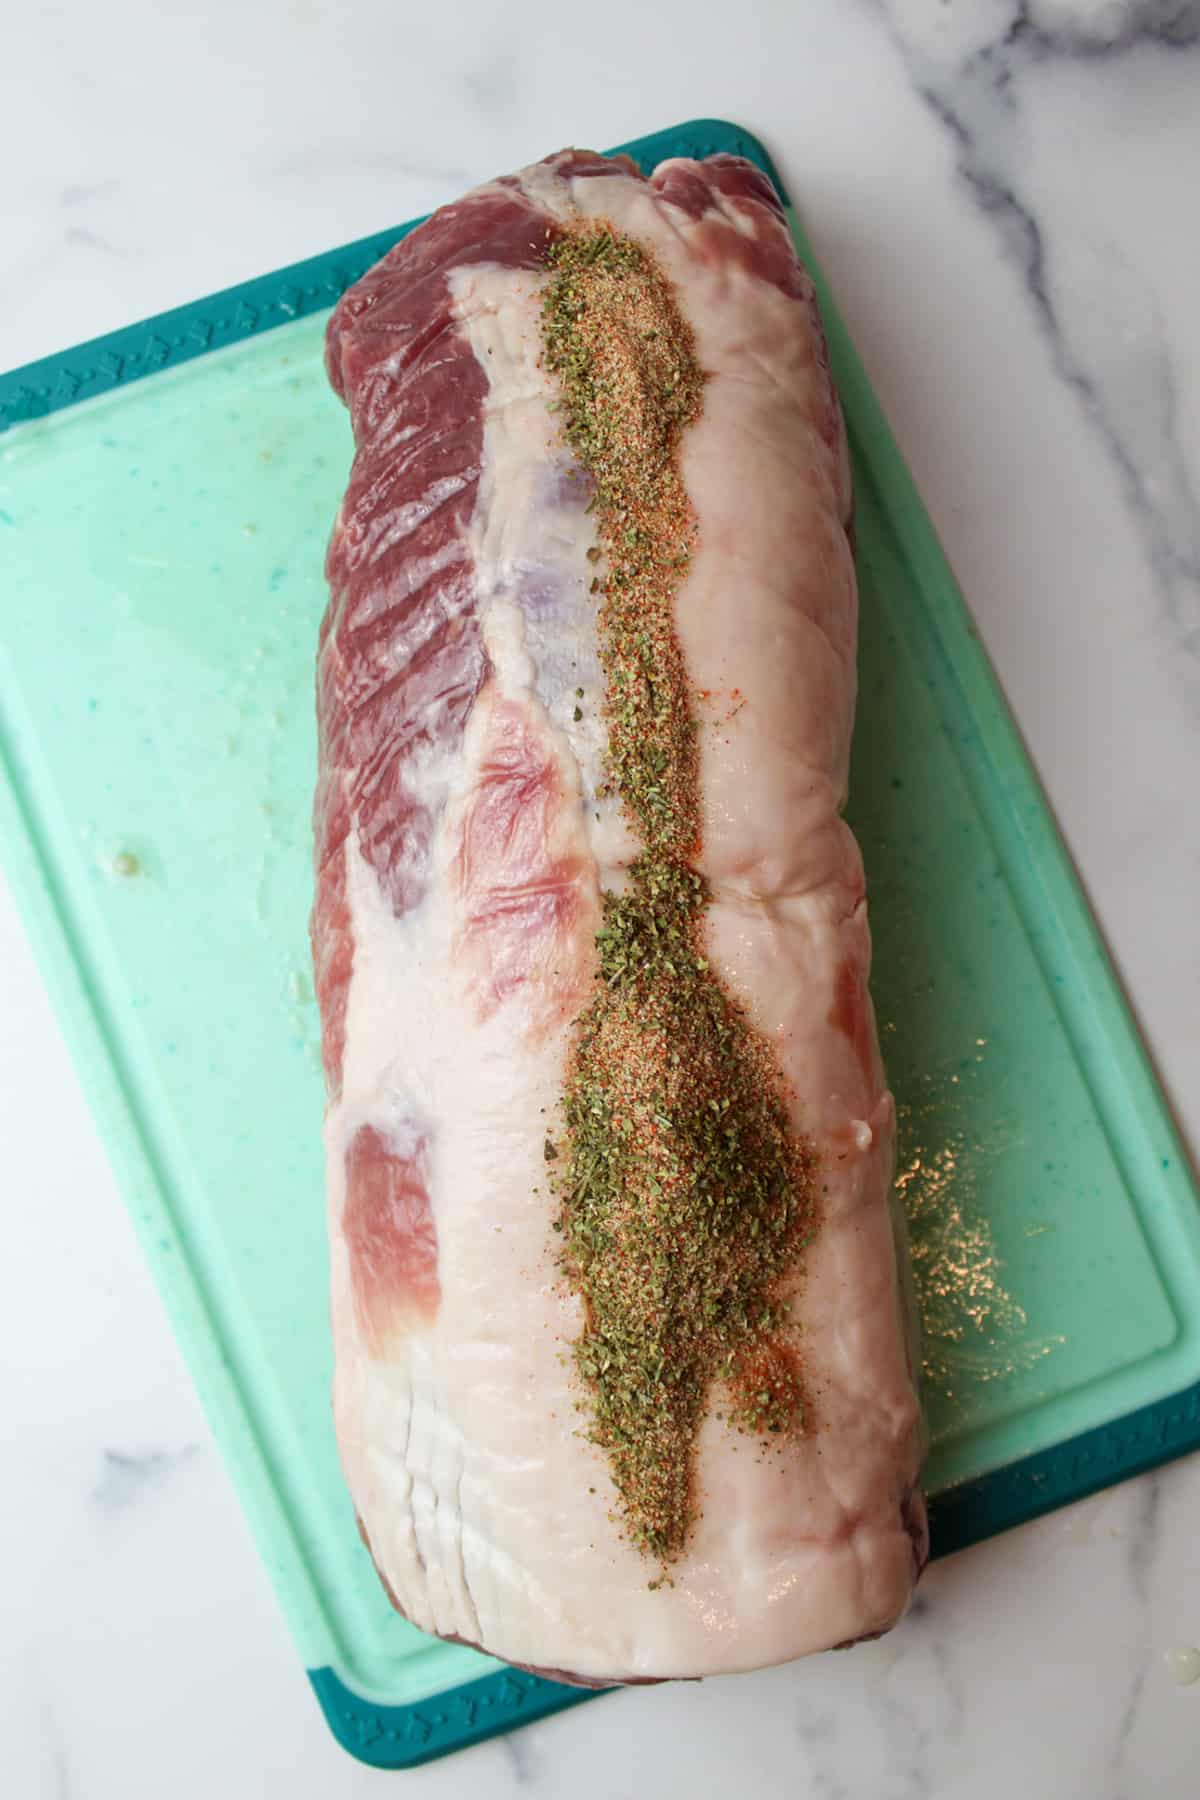 seasoning topped pork loin on a cutting board